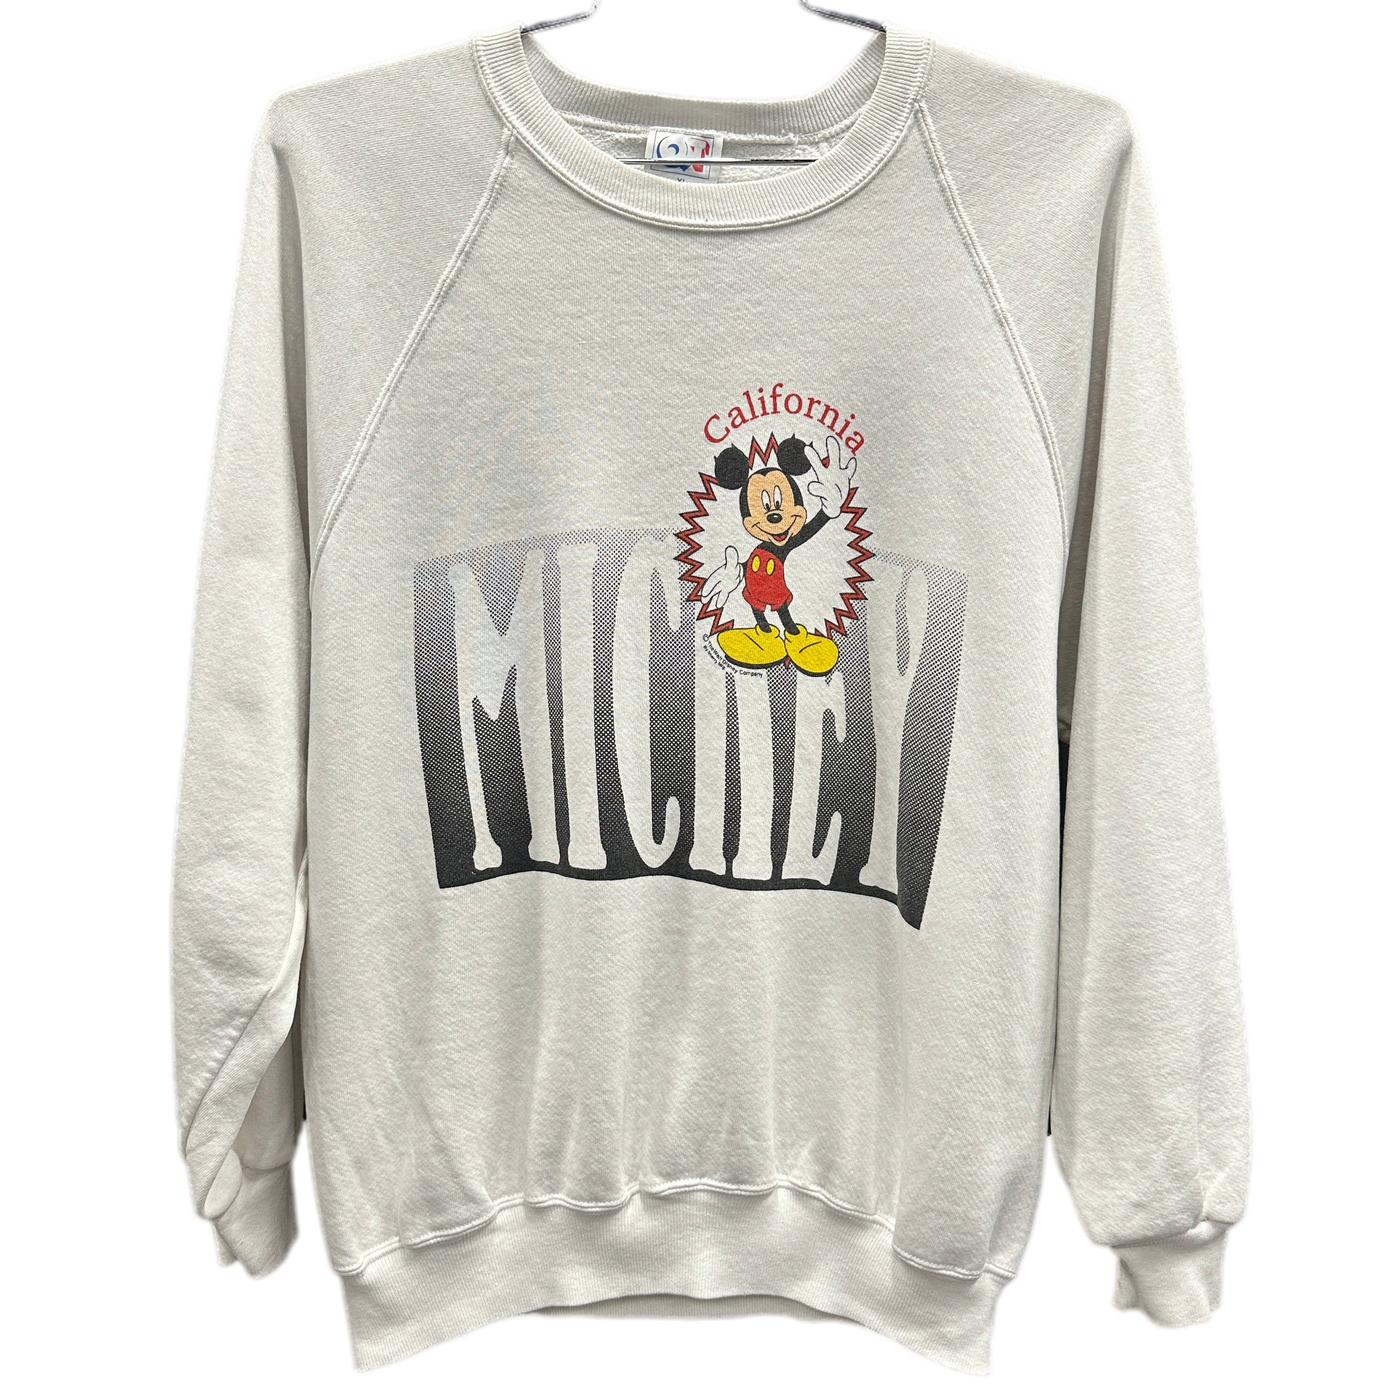 00's Mickey Mouse California White Cartoon Sweatshirt sz XL